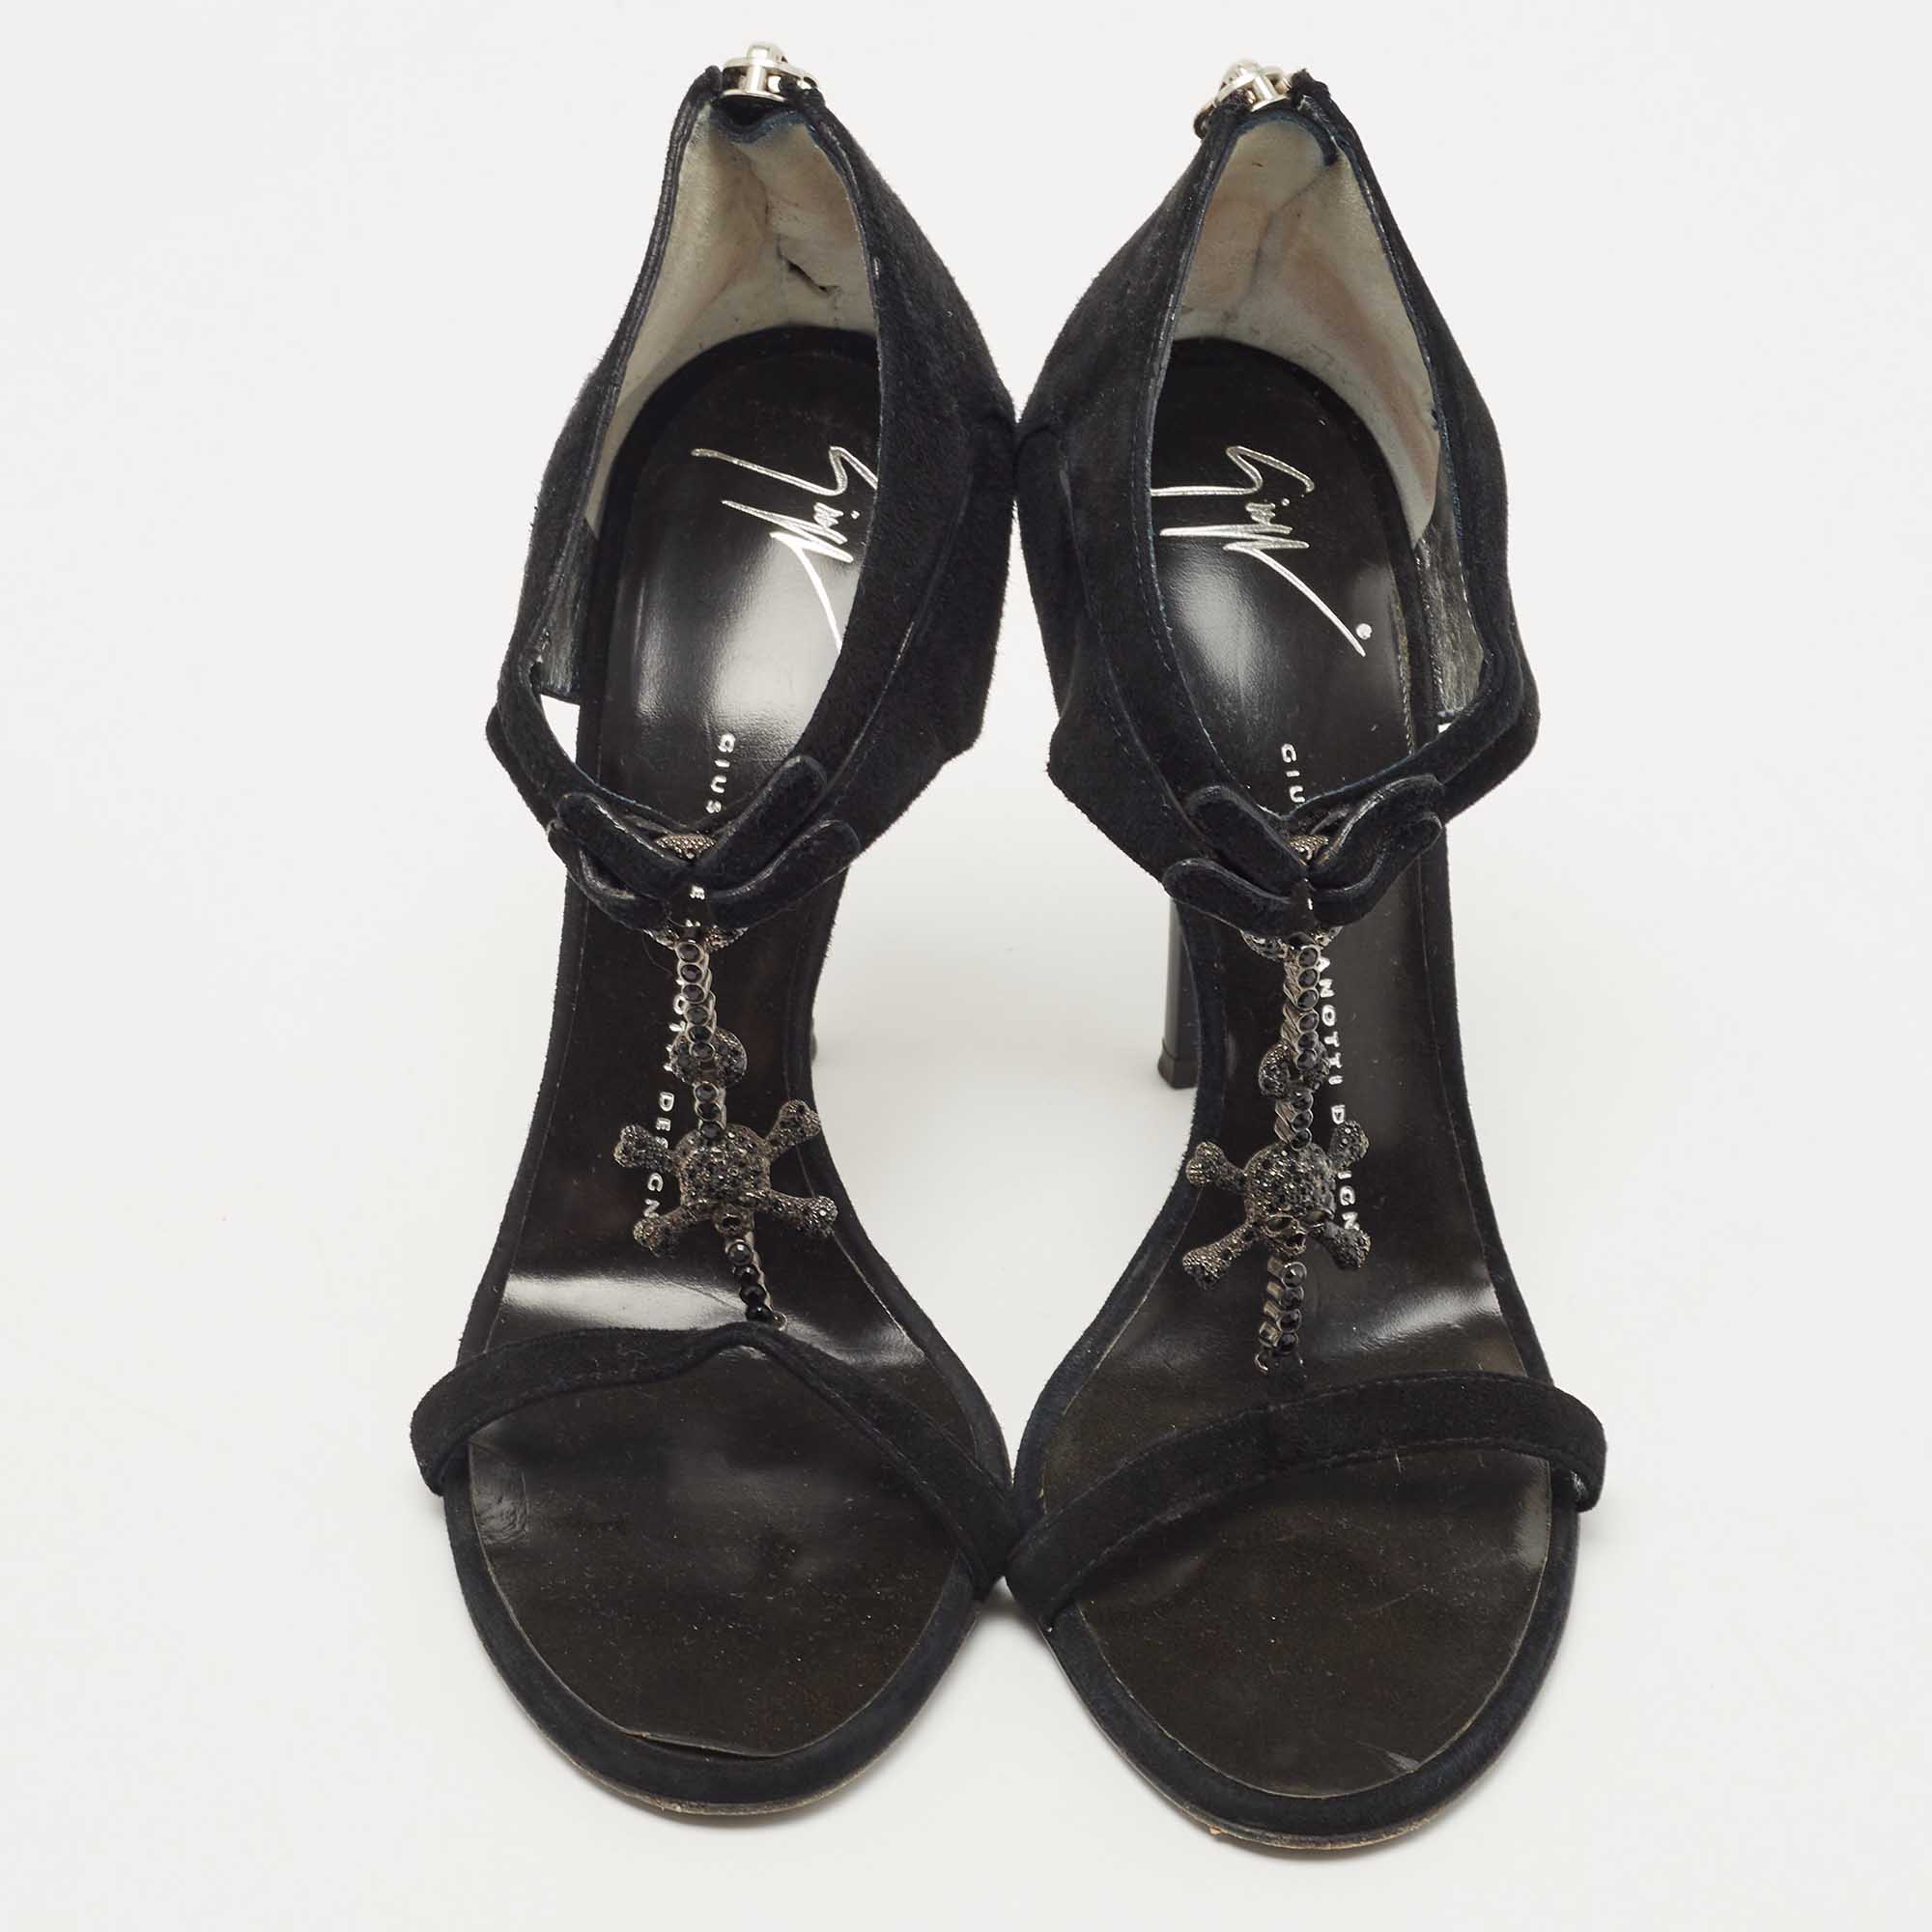 Giuseppe Zanotti Black Suede Crystal Embellished T-Strap Sandals Size 37